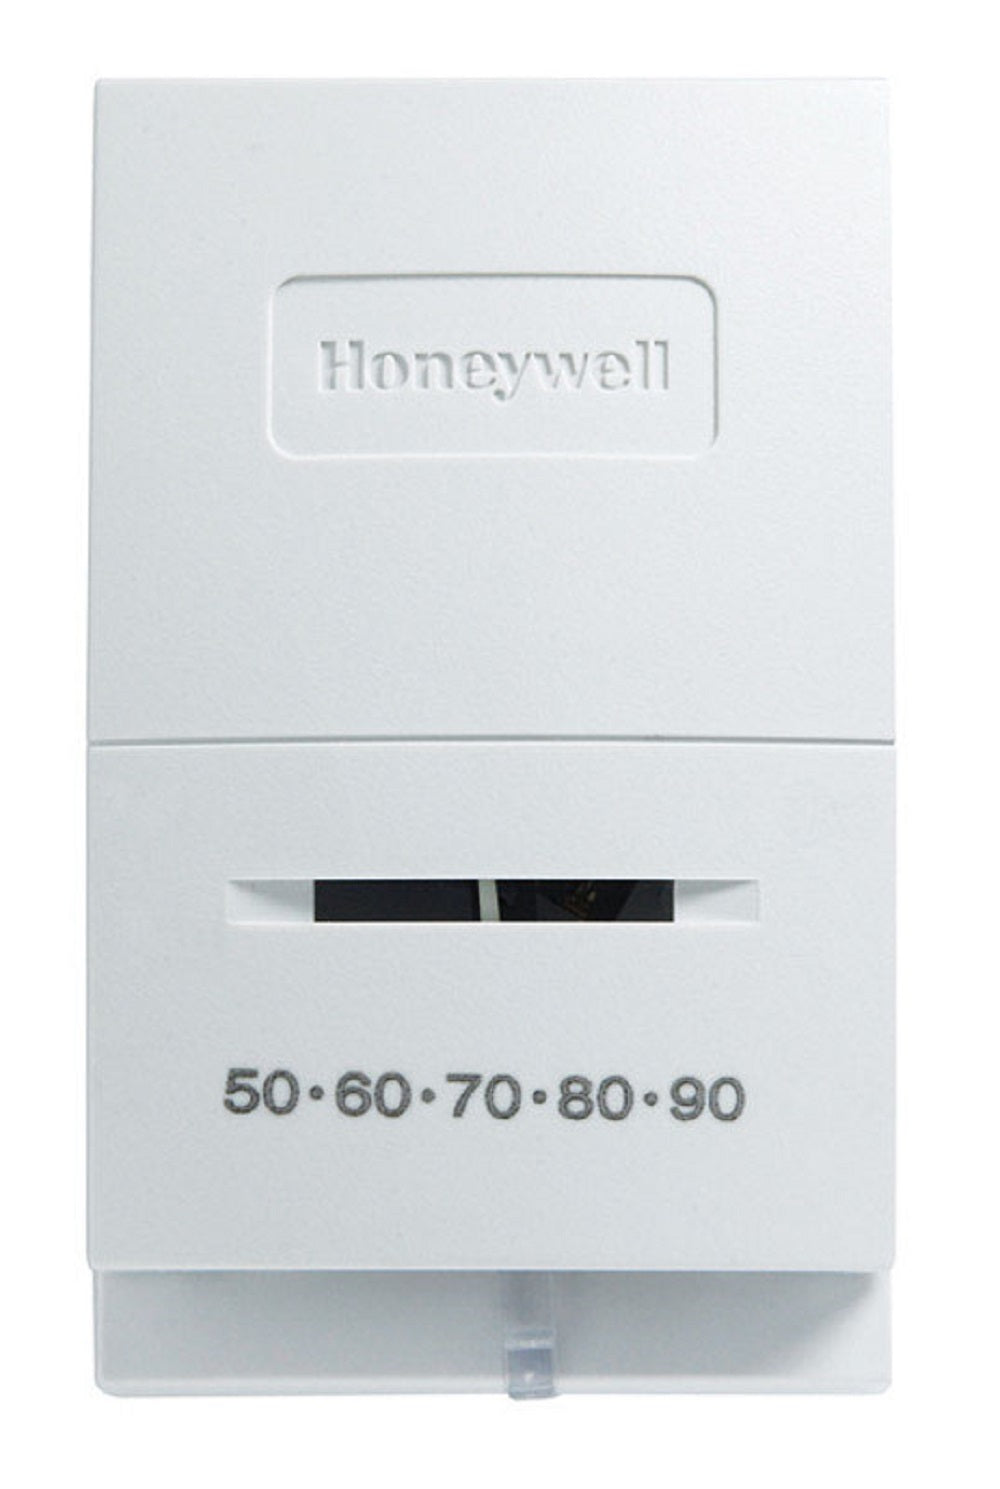 Honeywell CT50K1002/E1 Heating Thermostat, White